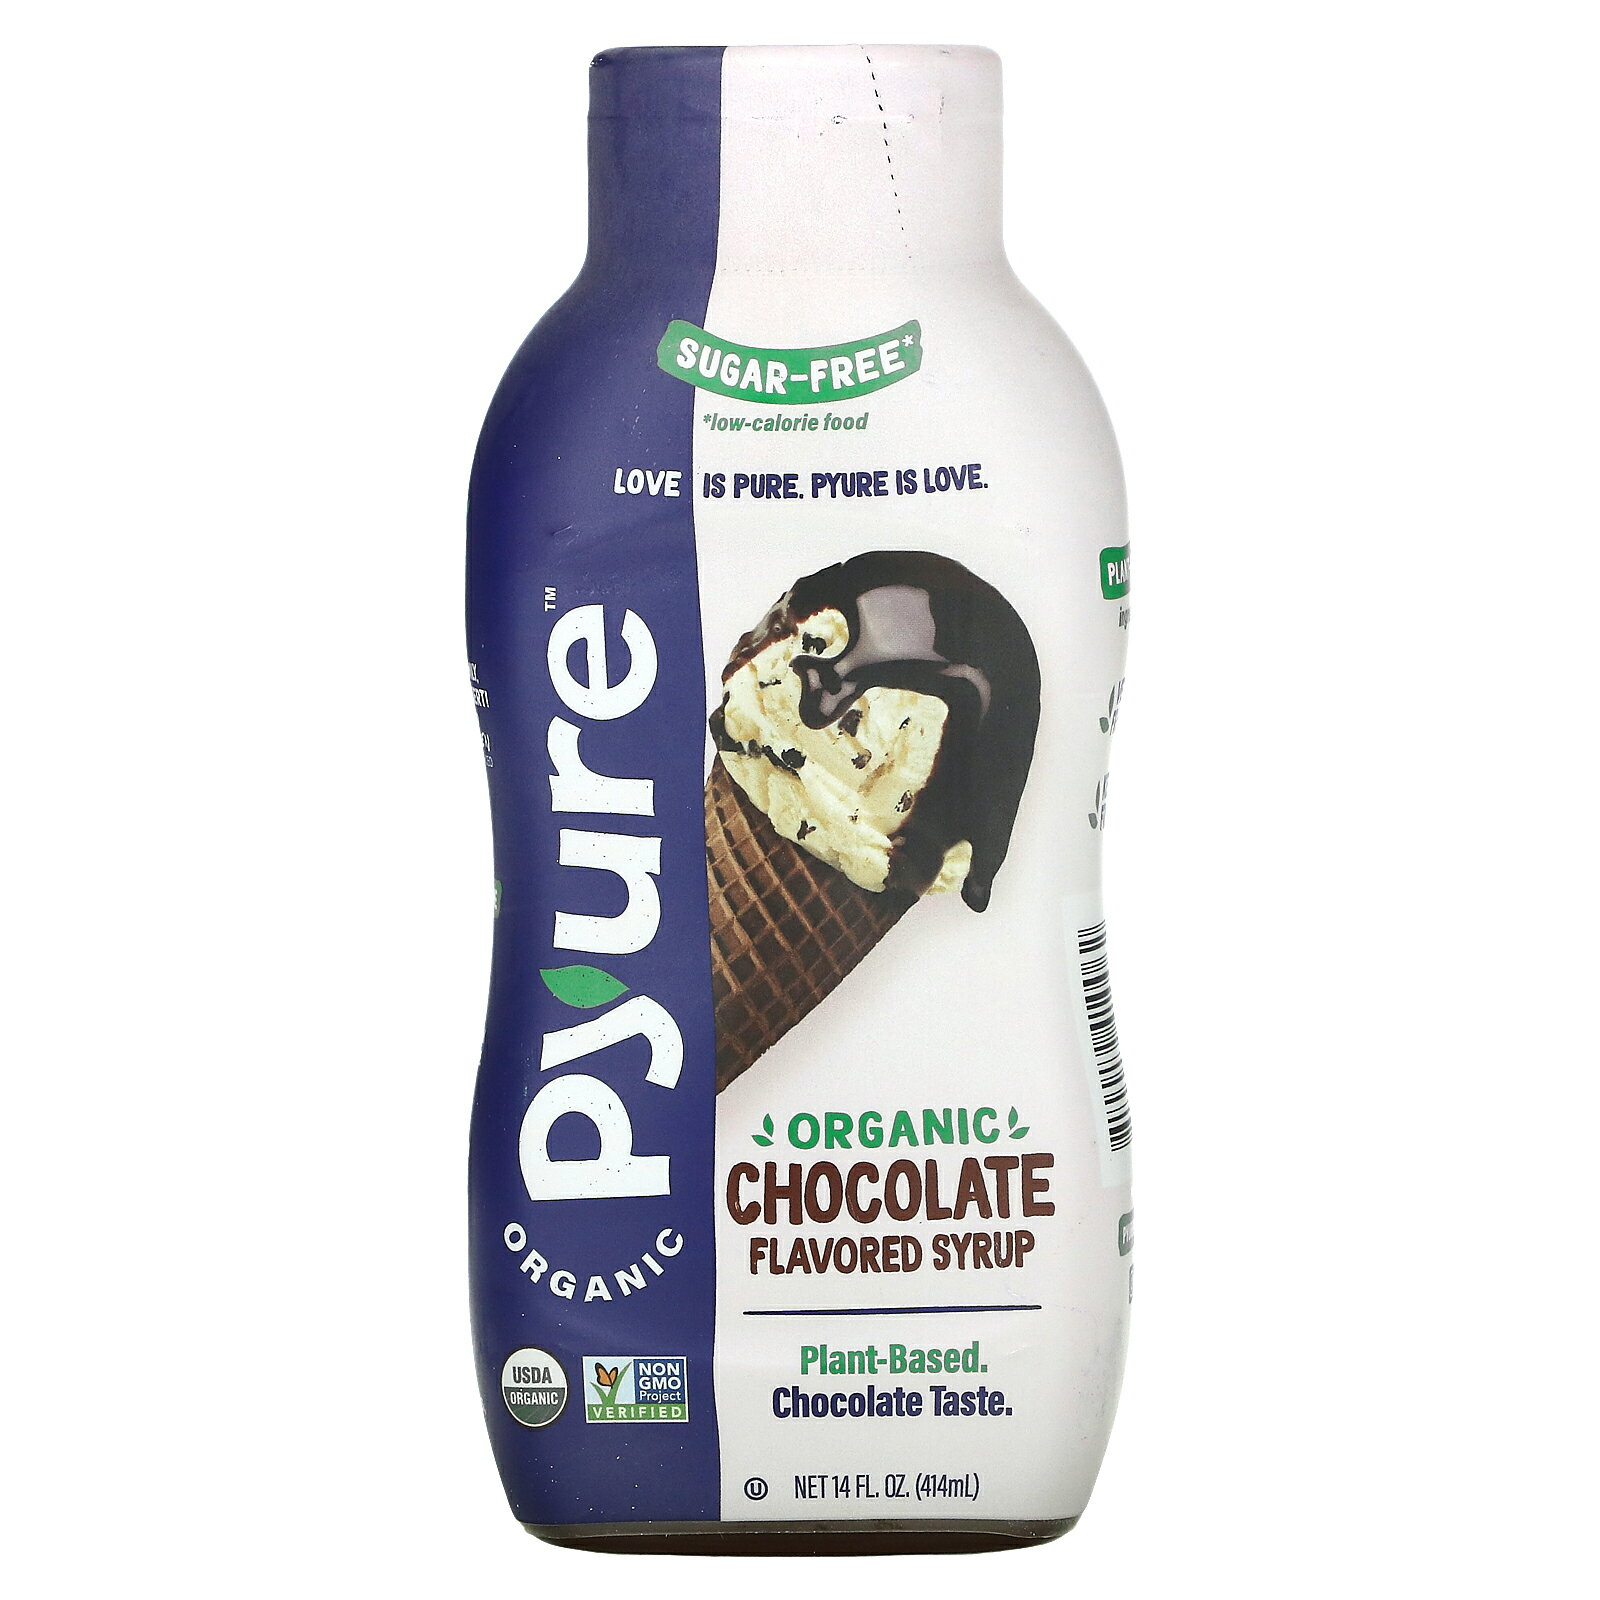 Pyure オーガニック チョコレート味シロップ 【 iHerb アイハーブ 公式 】 ピュレ シロップ チョコレートシロップ 砂糖不使用 無糖 414ml